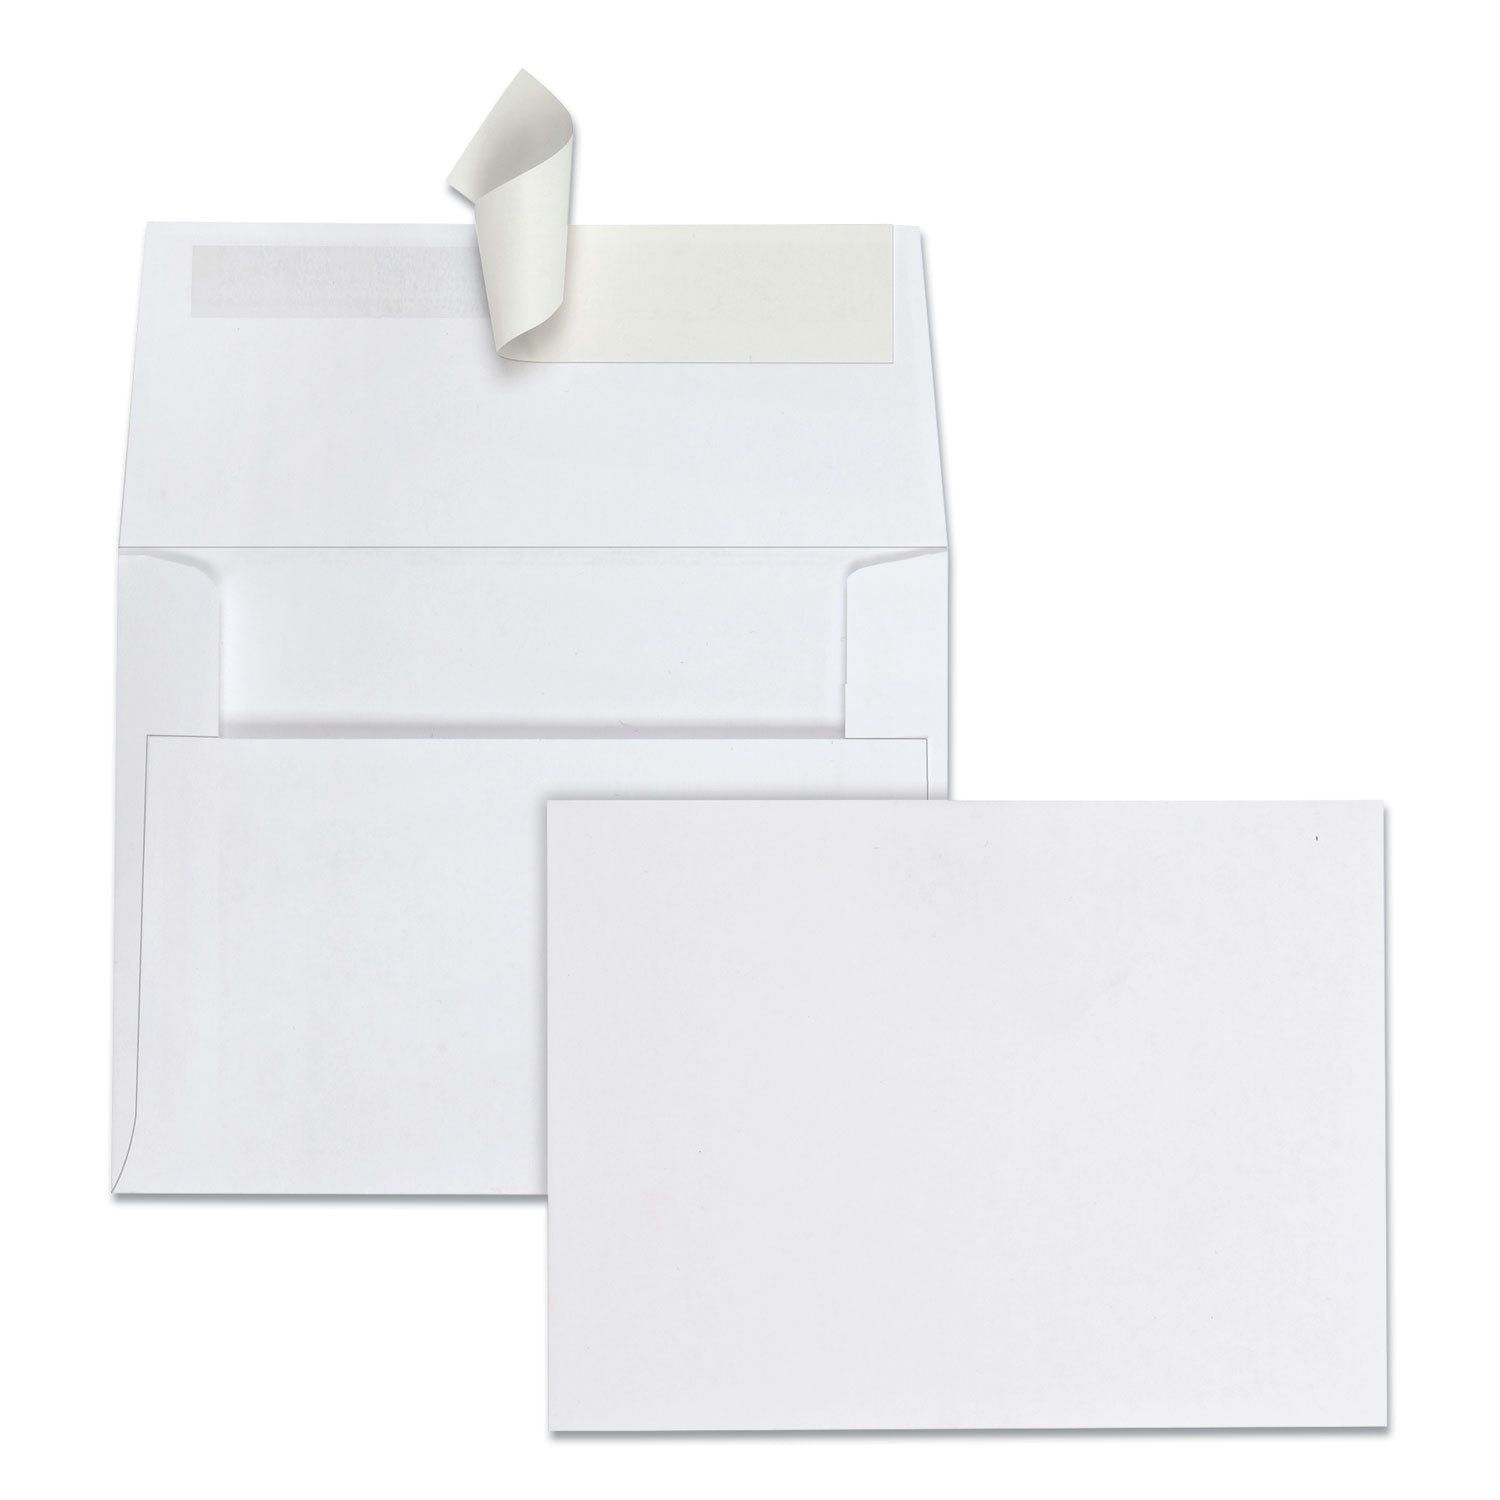 Greeting Card/Invitation Envelope, A-2, Square Flap, Redi-Strip Adhesive Closure, 4.38 x 5.75, White, 100/Box - 